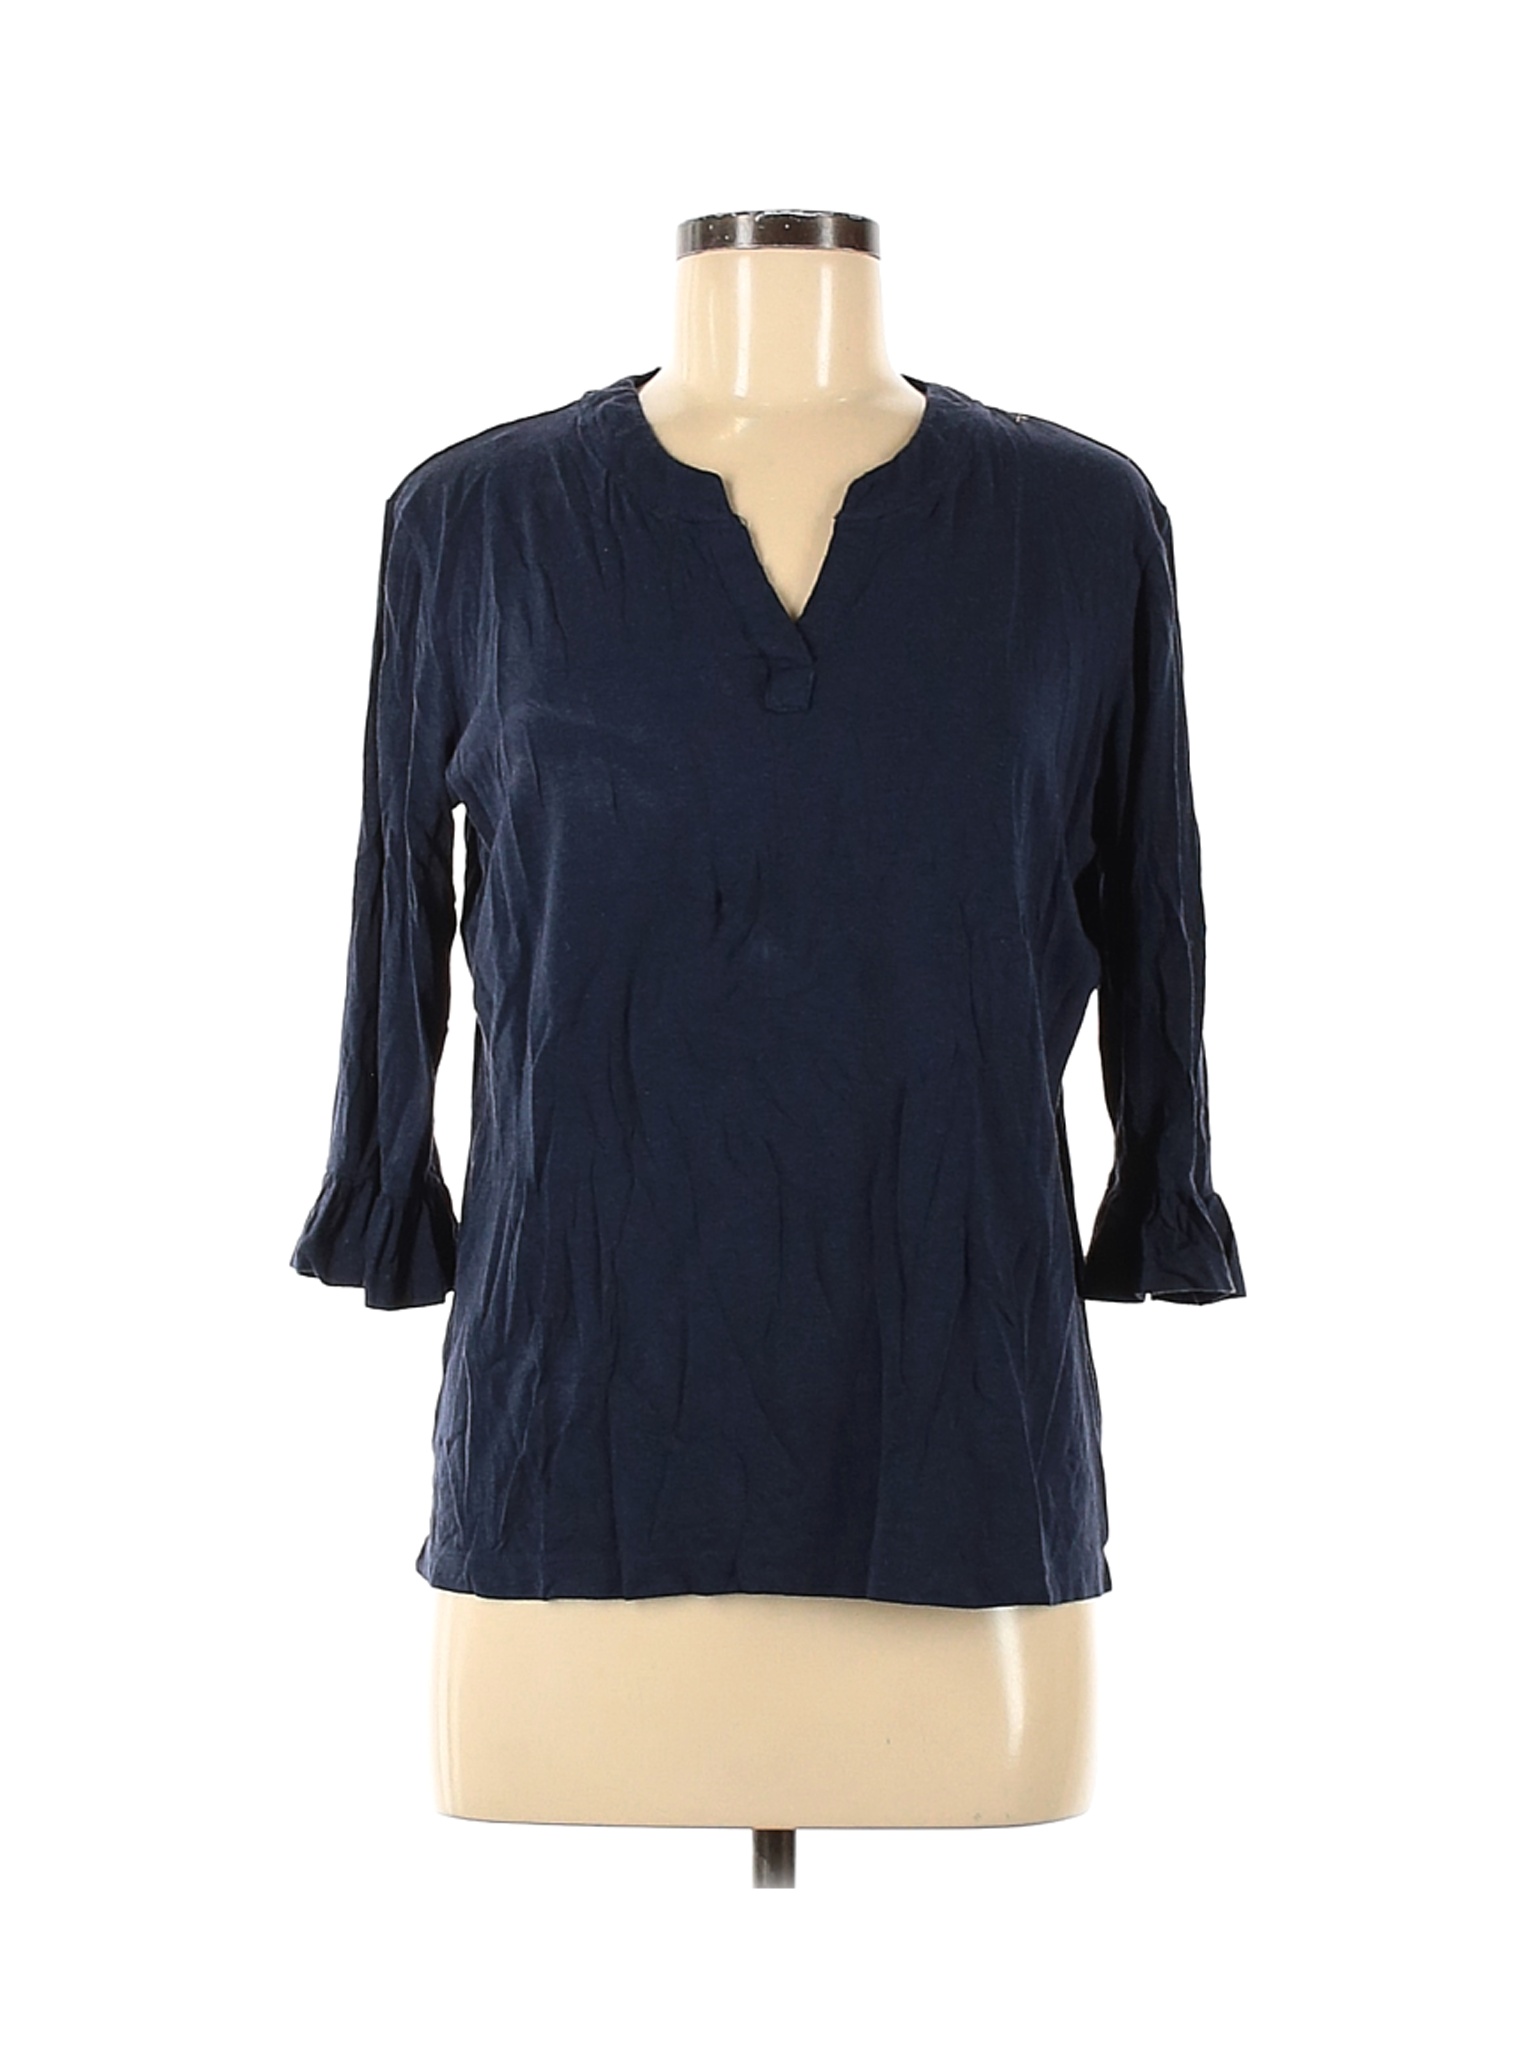 Hasting & Smith Women Blue 3/4 Sleeve Top M | eBay